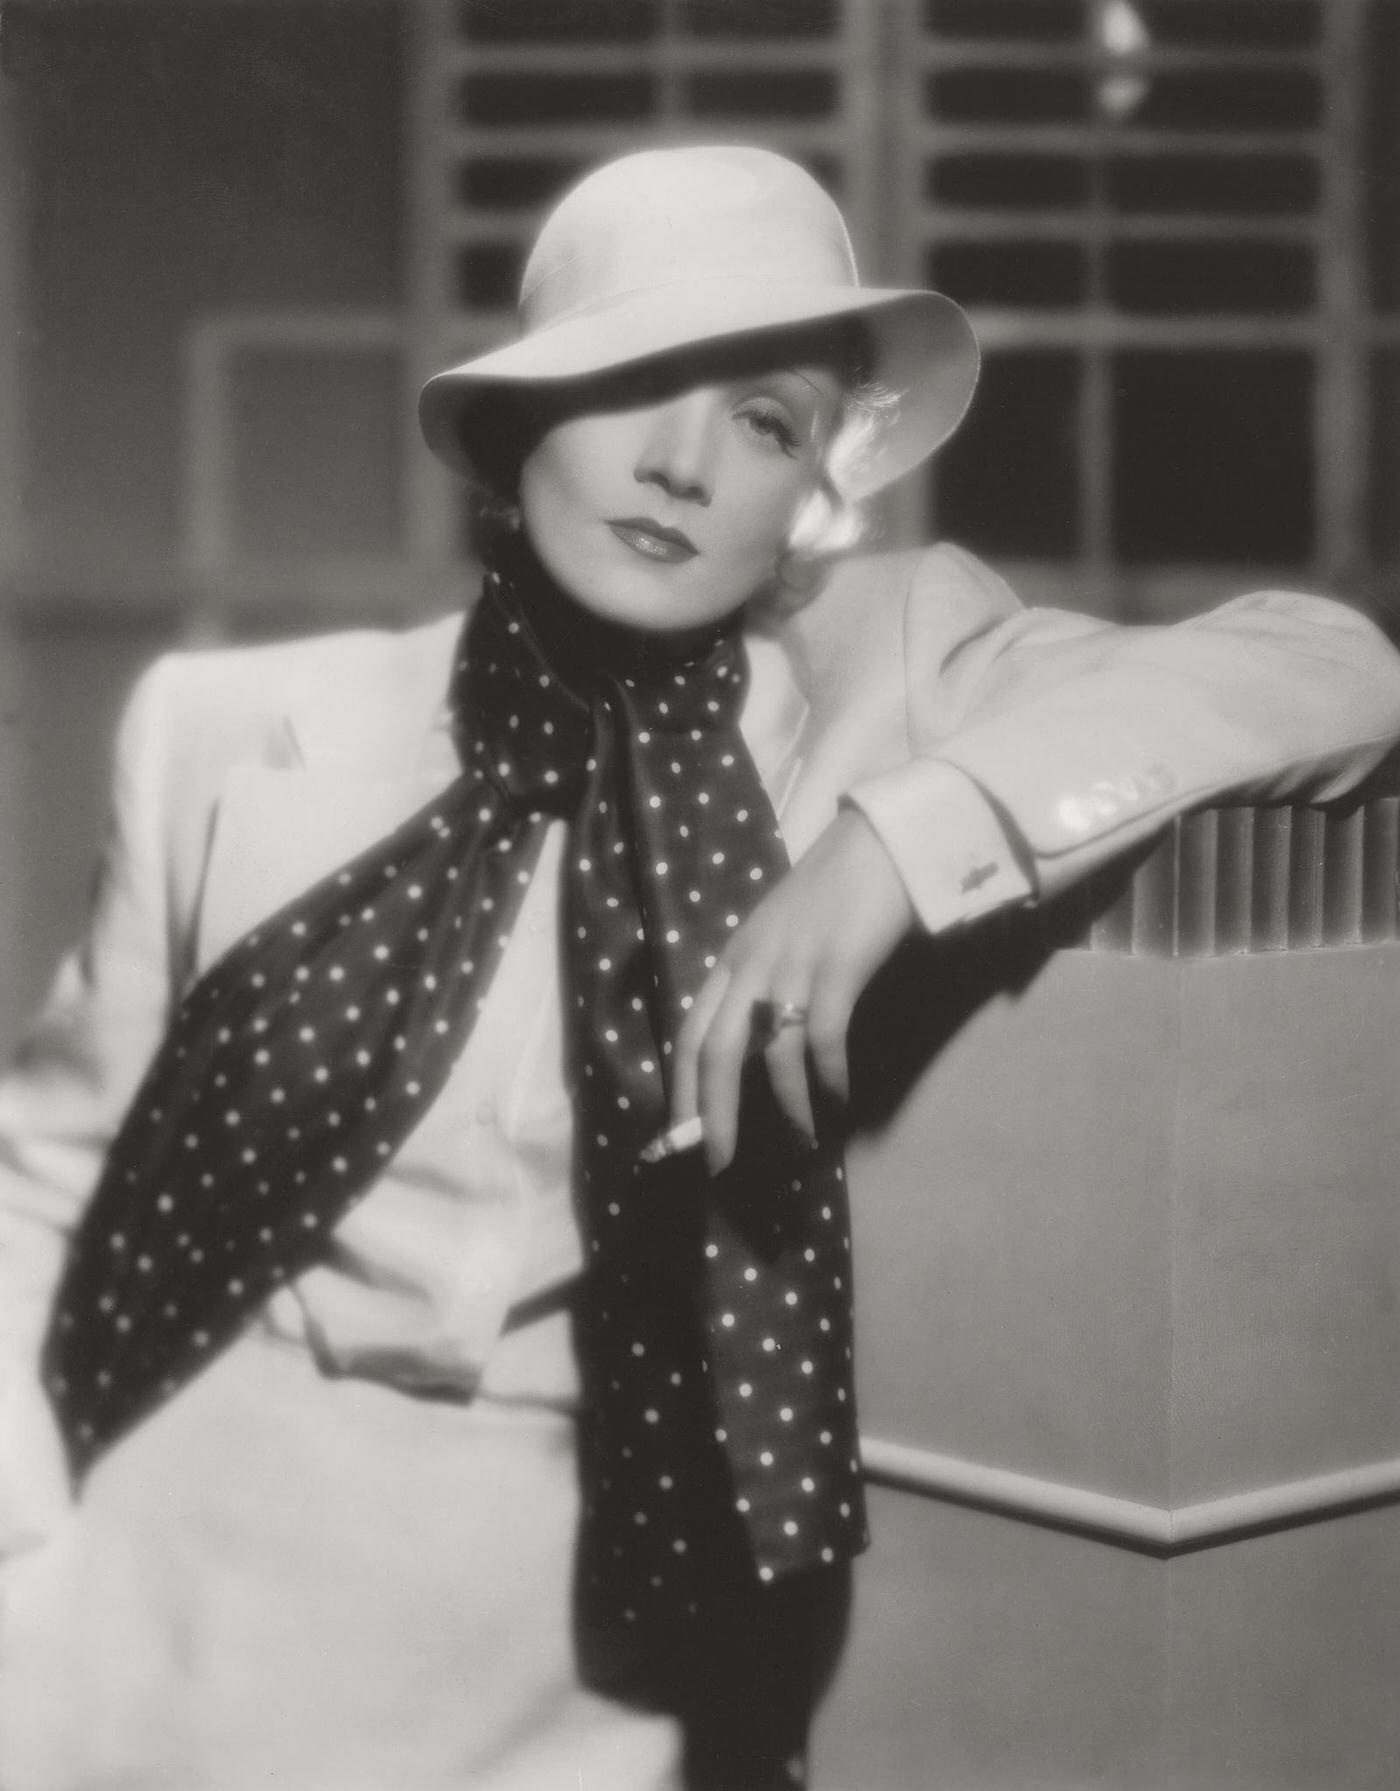 A photograph of Marlene Dietrich smoking taken in 1934.